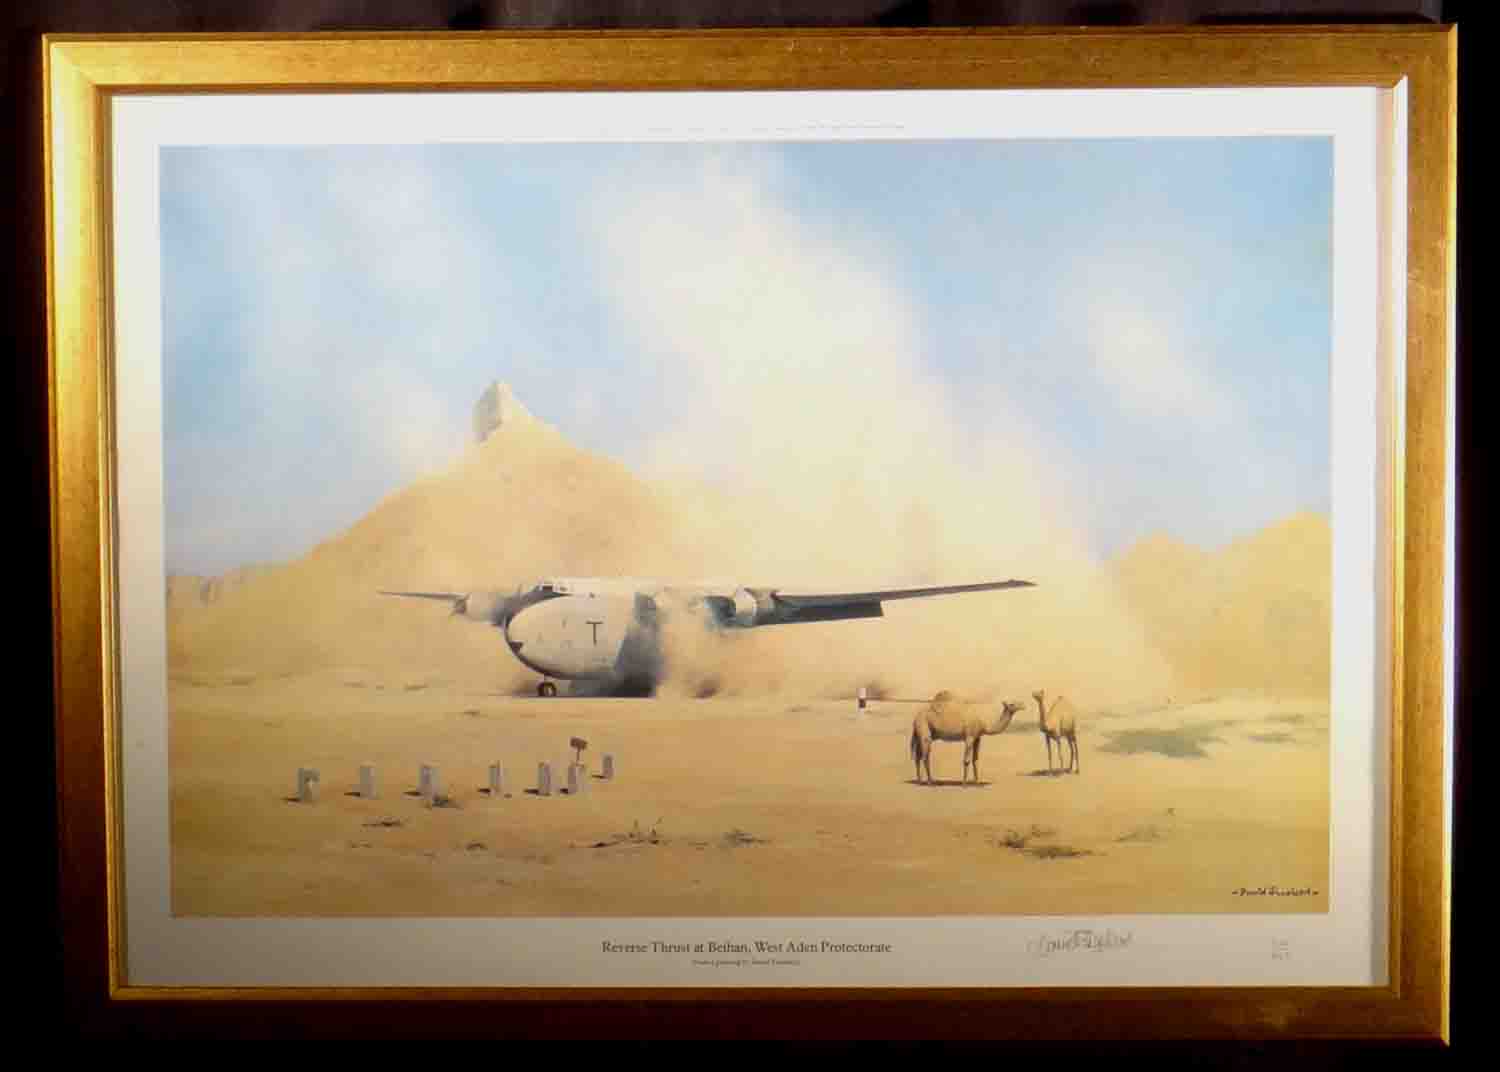 reverse thrust at Beihan, west Aden, protectorate, aviation